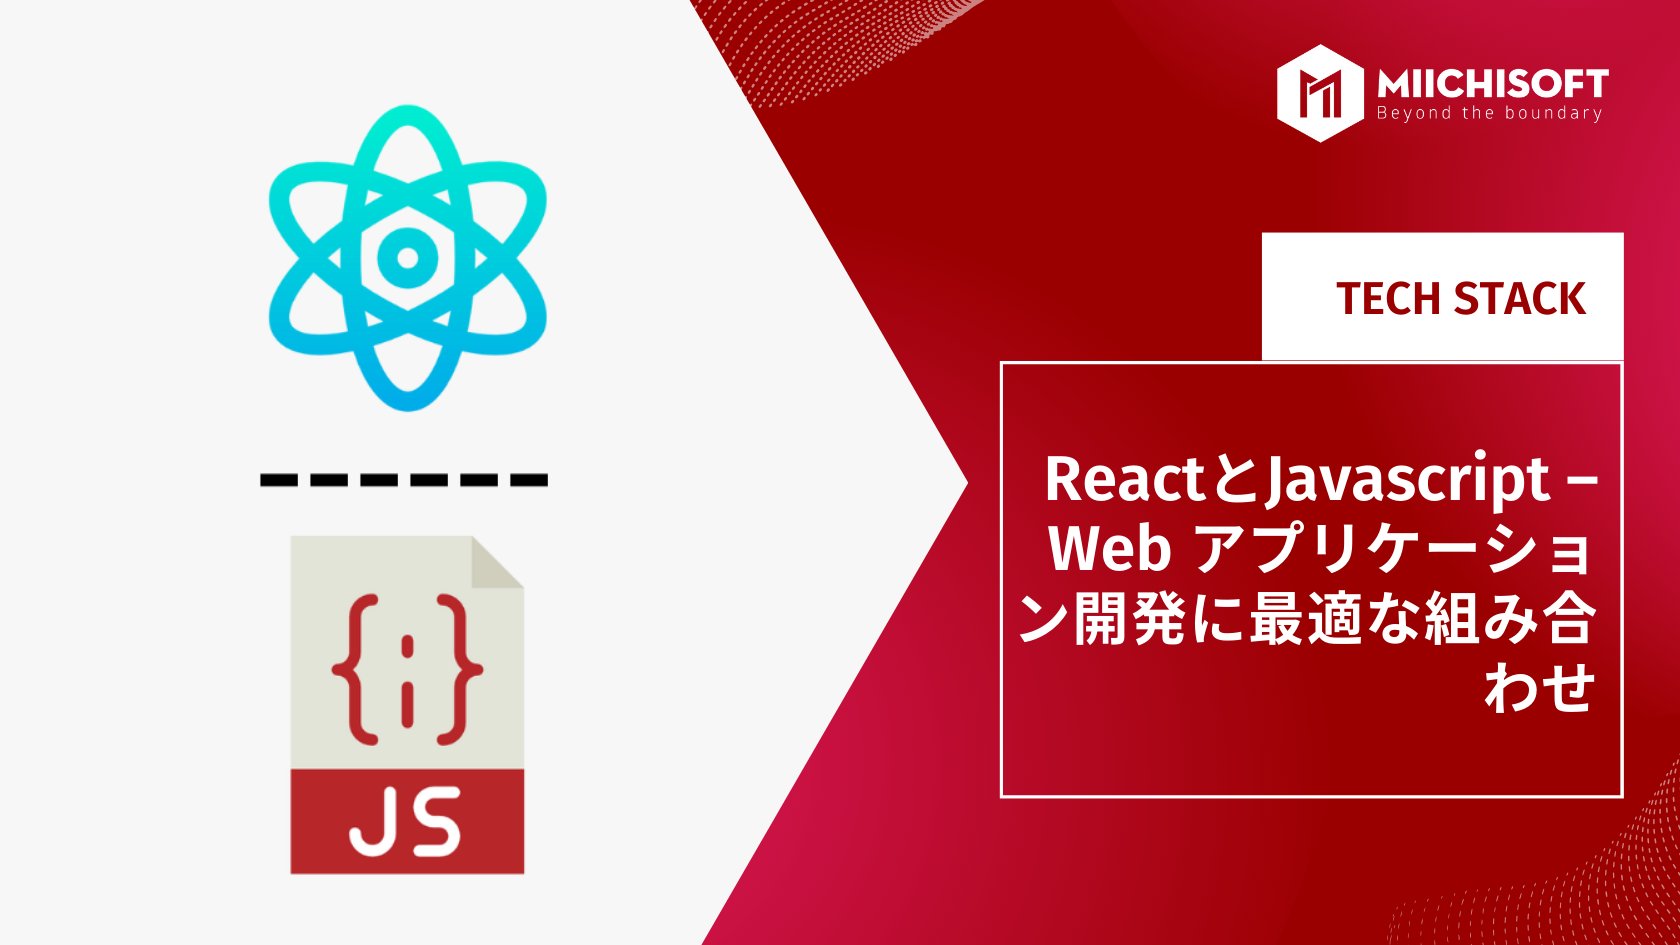 ReactとJavascript – Web アプリケーション開発に最適な組み合わせ